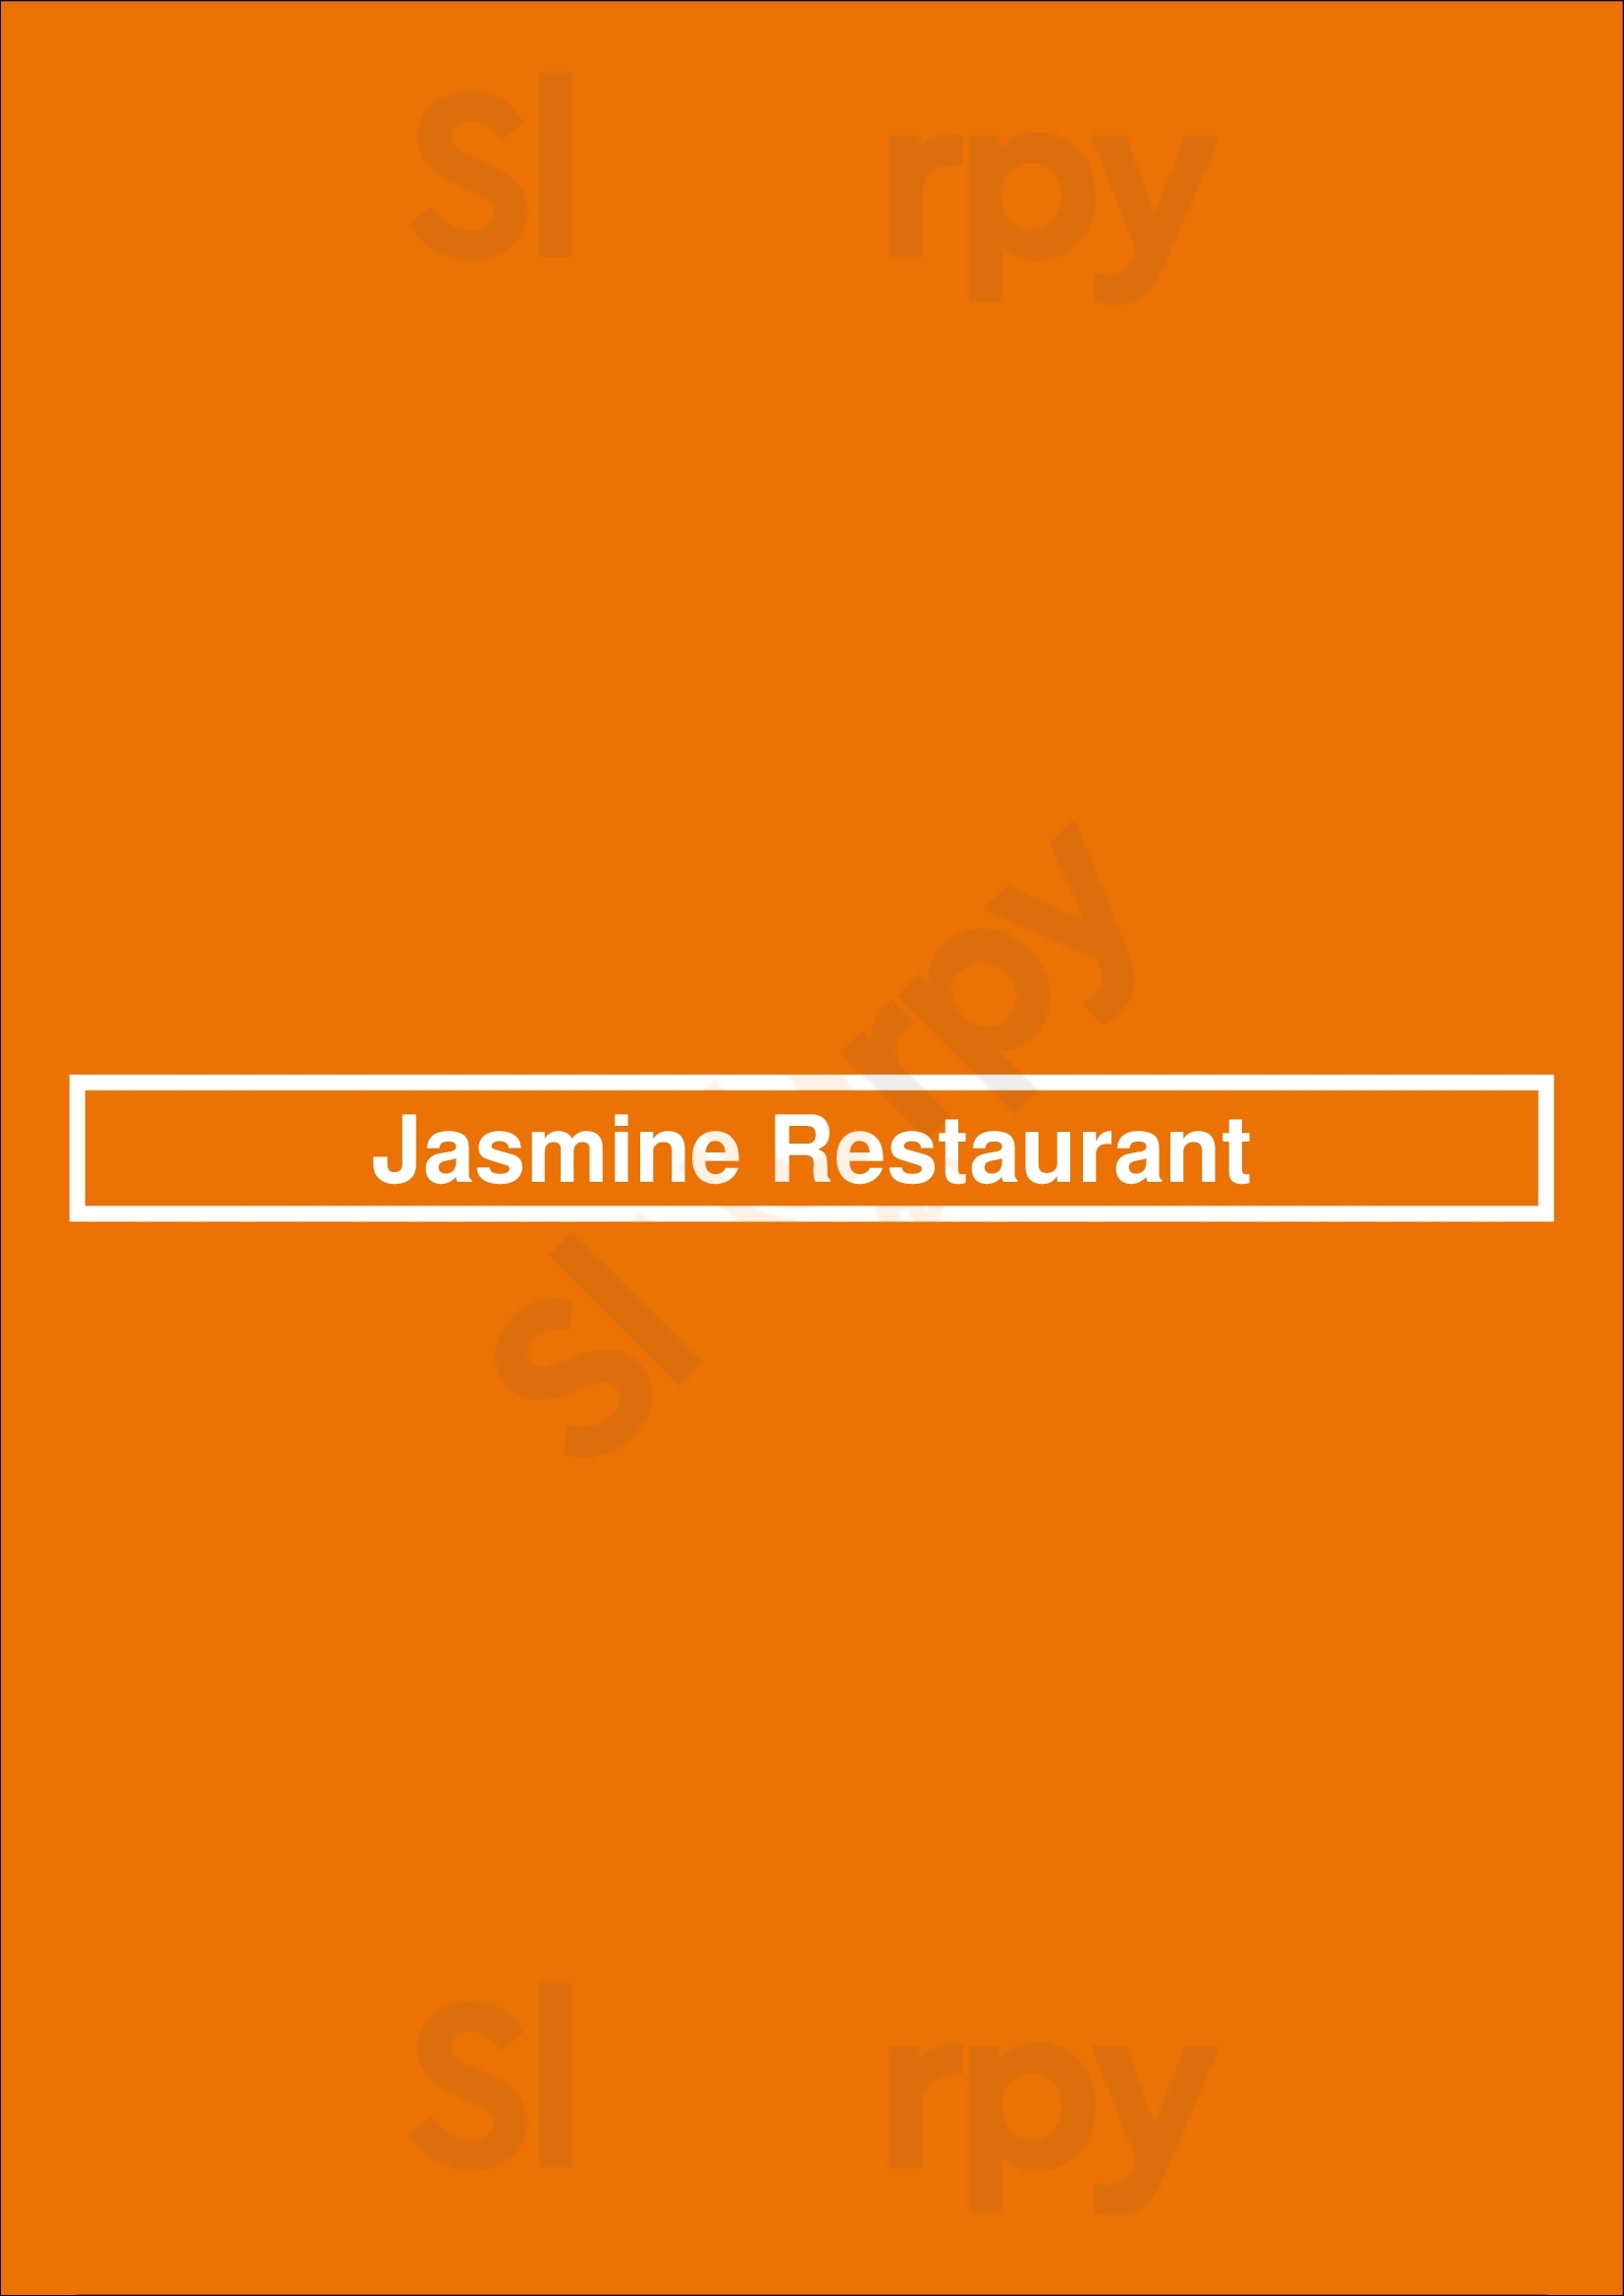 Jasmine Restaurant Saskatoon Menu - 1